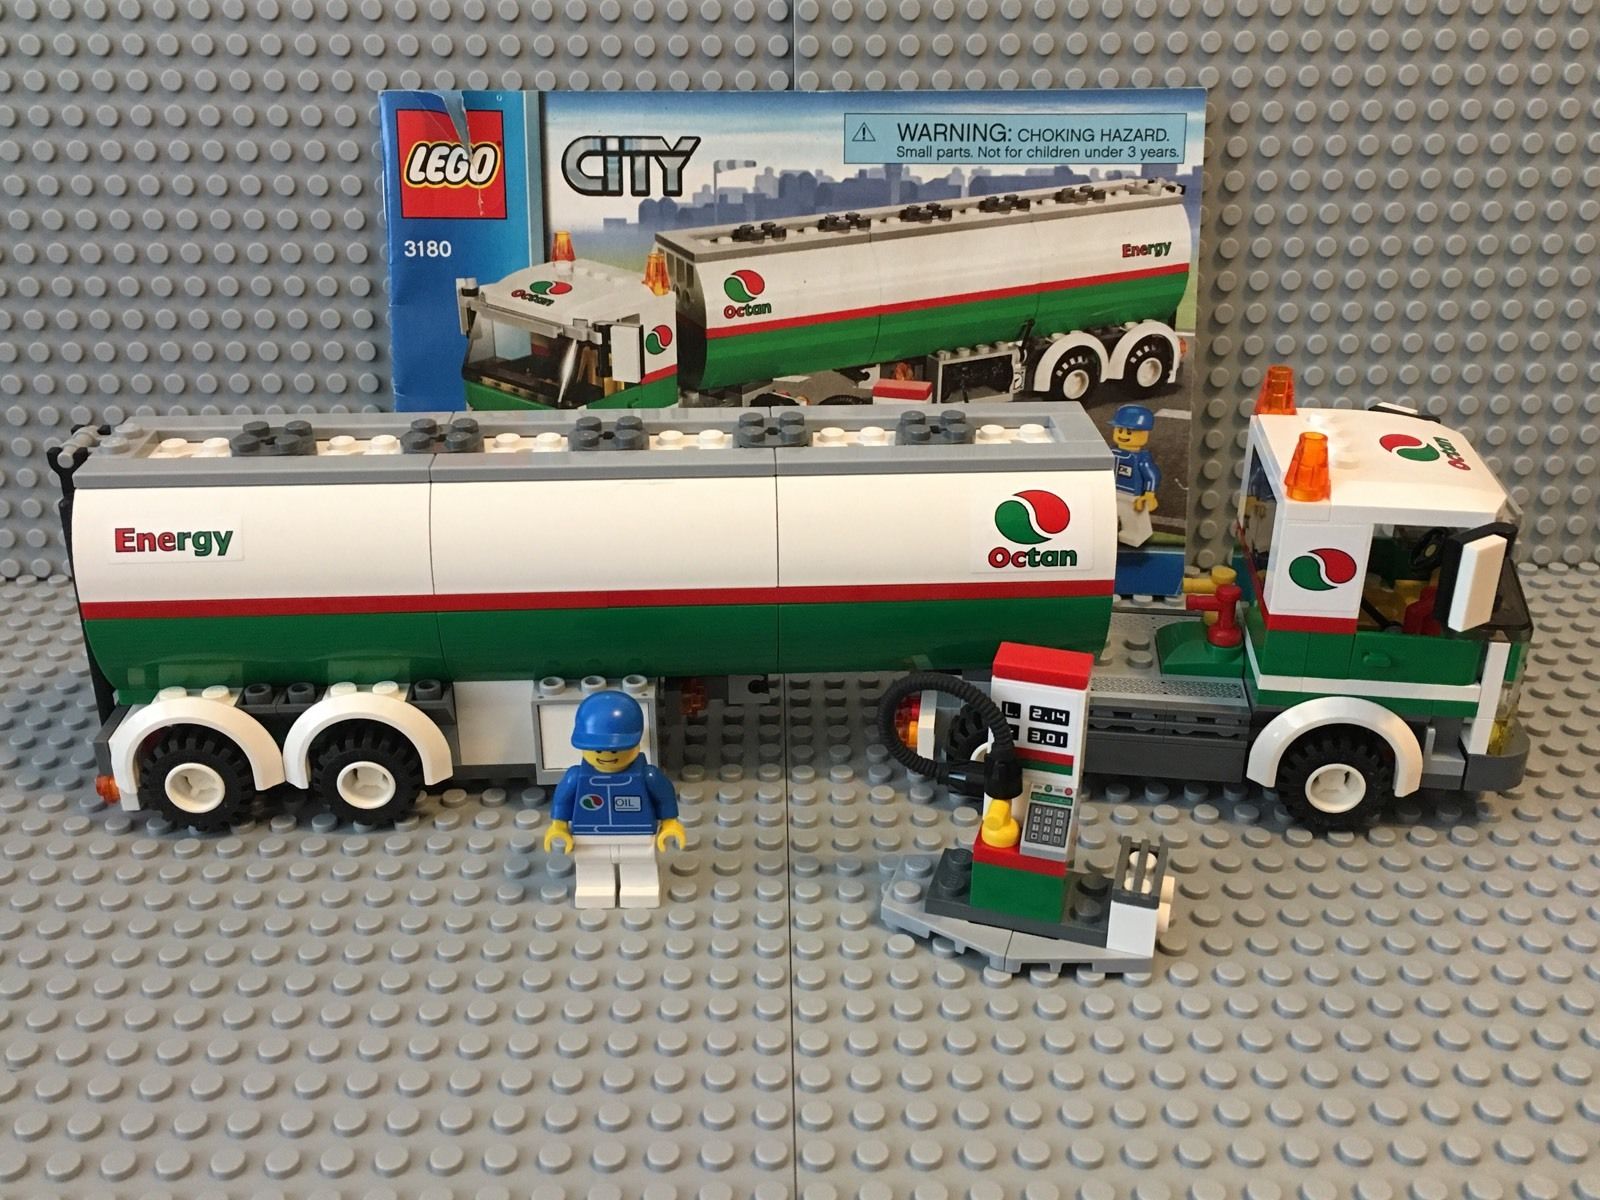 Udvalg Forsvinde reductor Twitter 上的Ryan Walls："Lego City Set 3180 Octan Gas Tanker Truck! Check it  out! #Lego #LegoCity #TankerTruck #Minifigures #Octan #Toys  https://t.co/JOIo0eubQC https://t.co/rLcbBxsCk9" / X